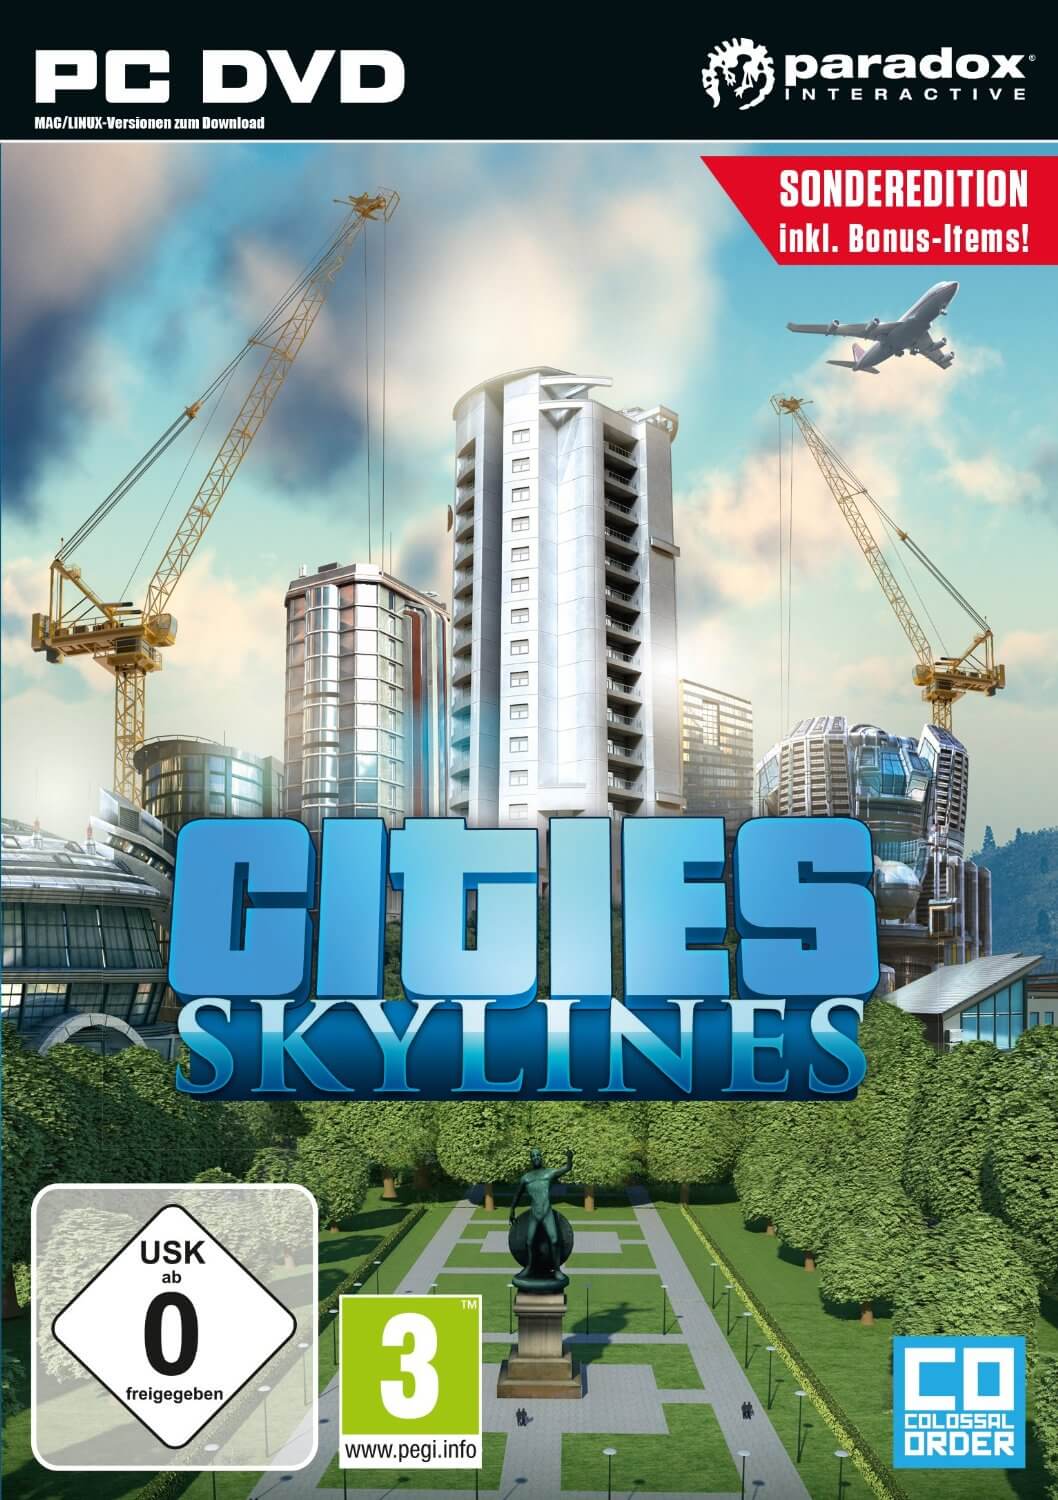 cities skylines mac game 2016